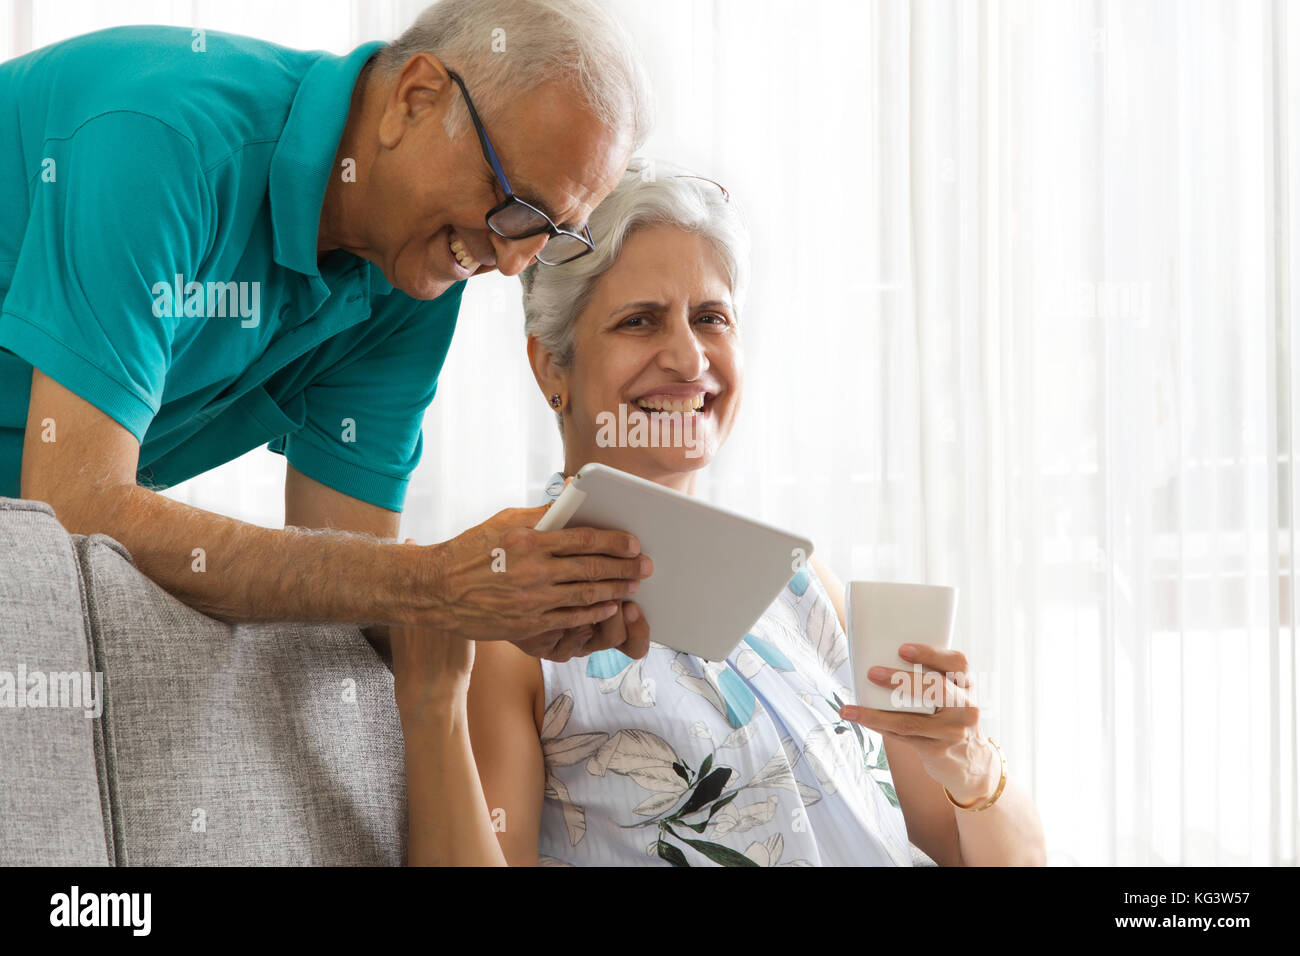 Senior man showing digital tablet to senior woman Stock Photo